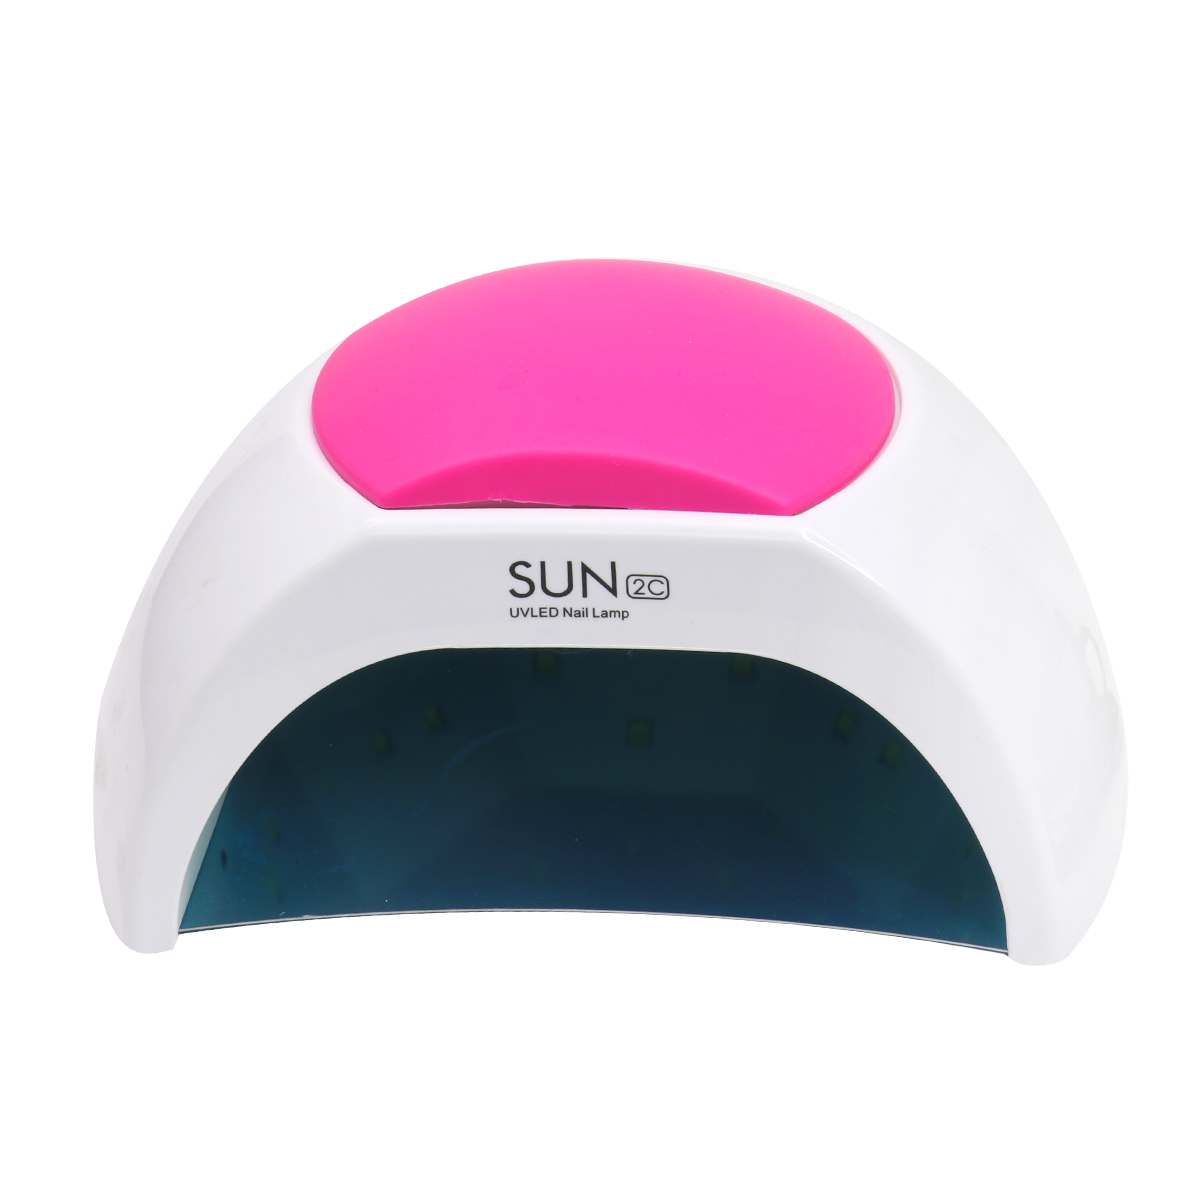 SUN x5 Plus UV LED Lamp – Well Gel Nail Shop